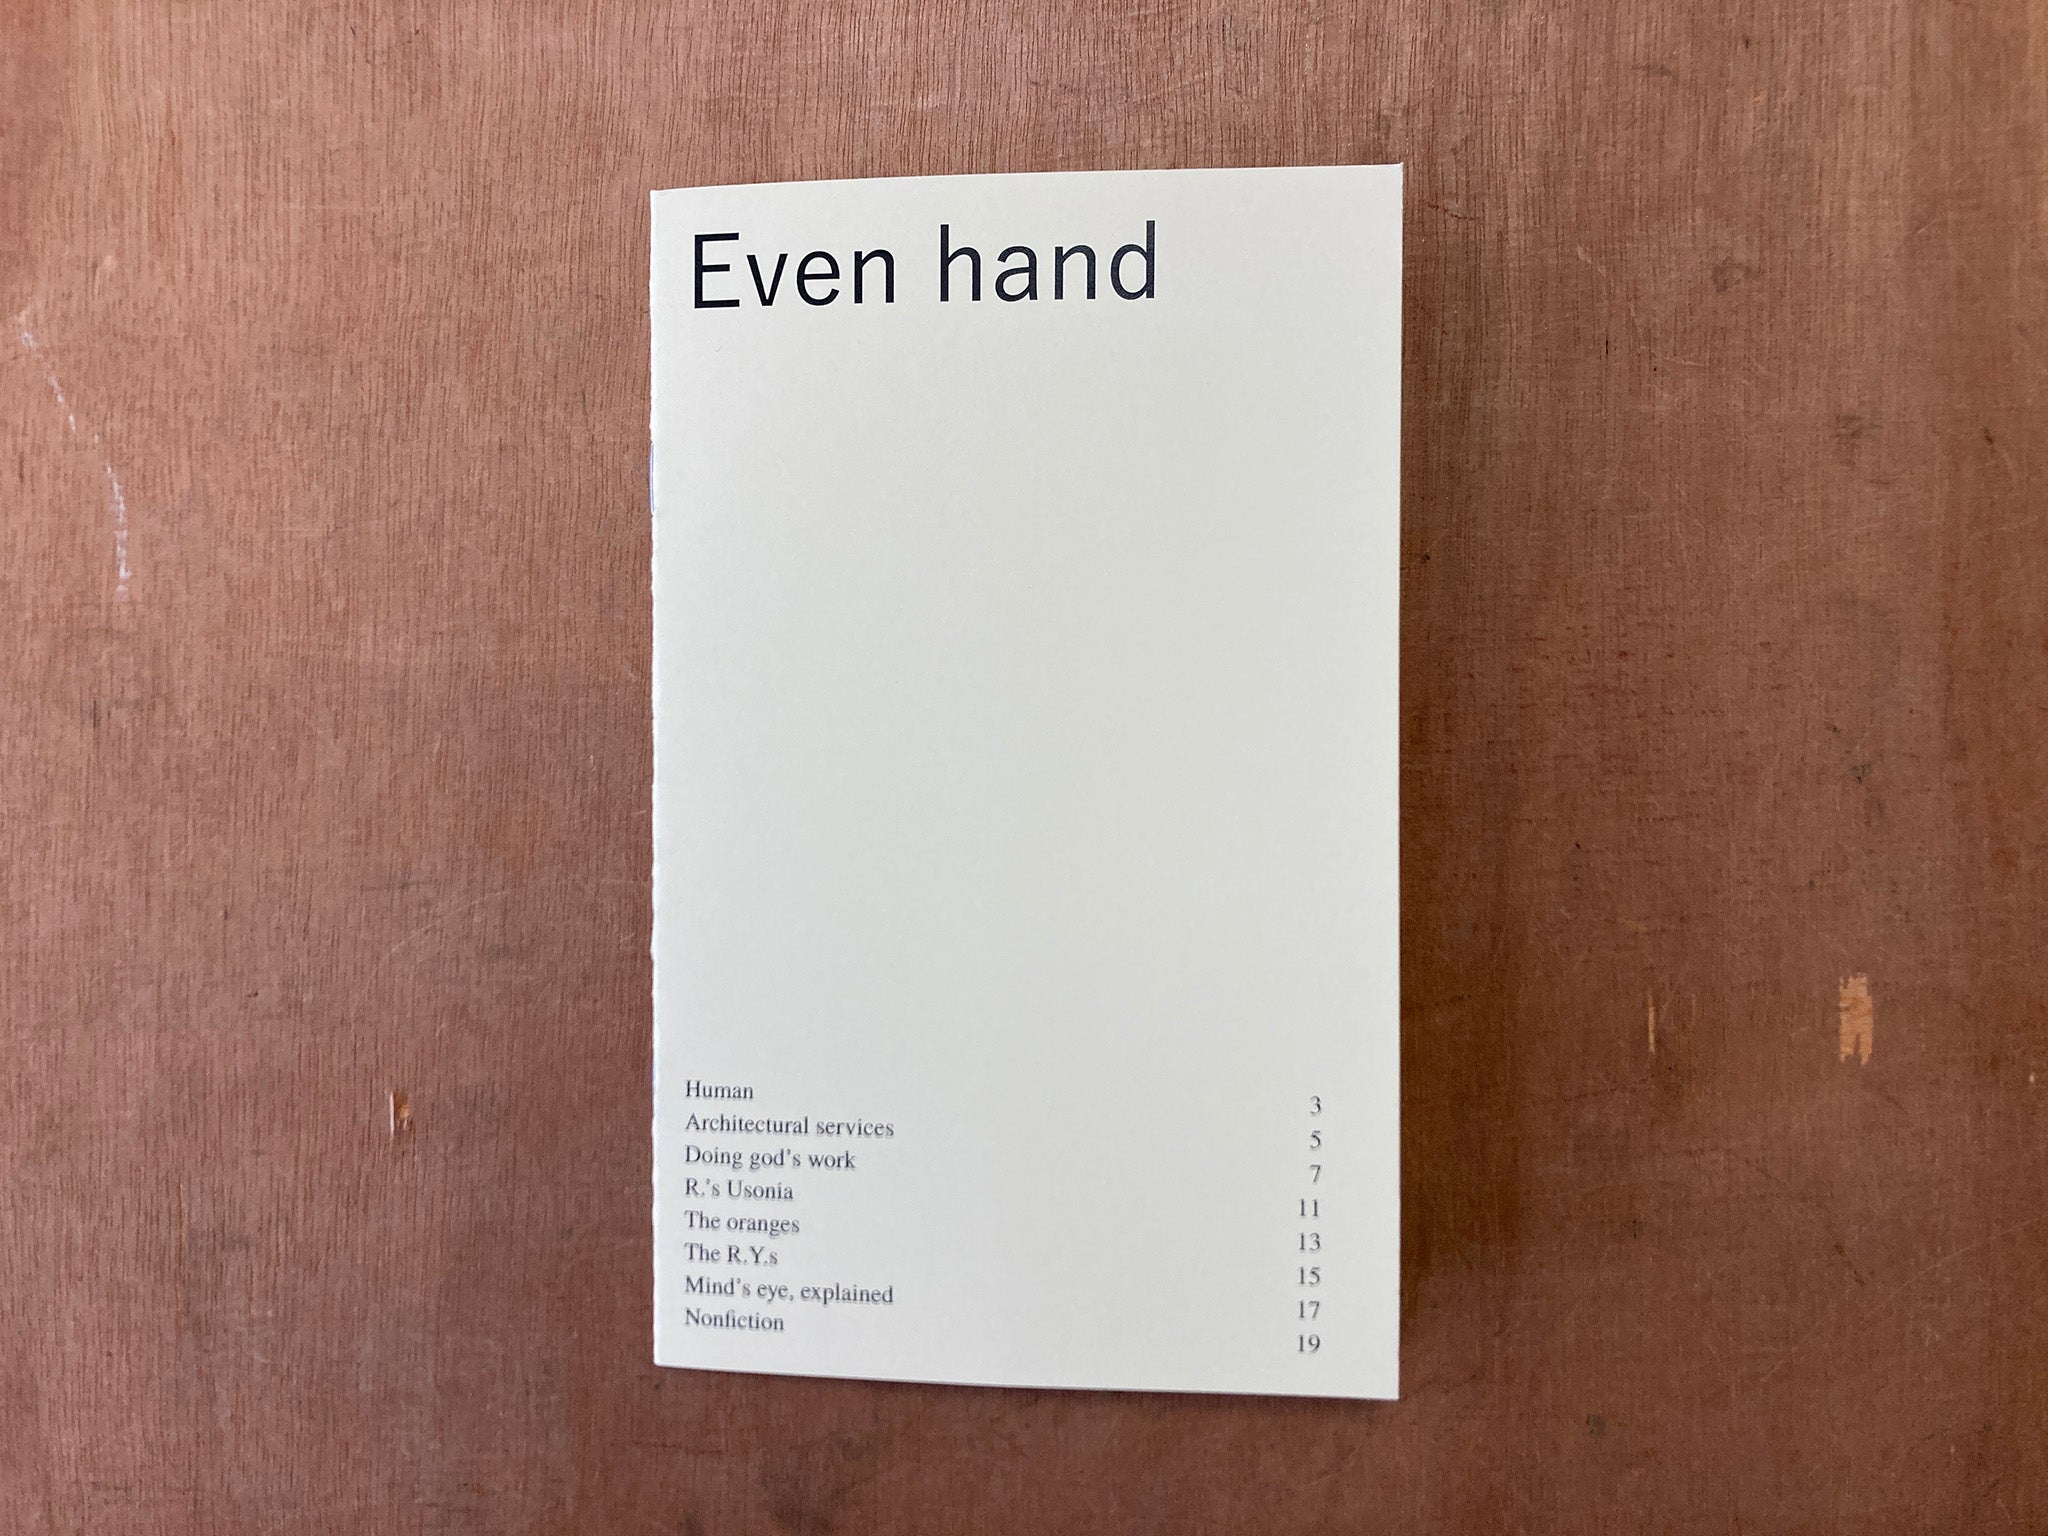 EVEN HAND by Évita Yumul